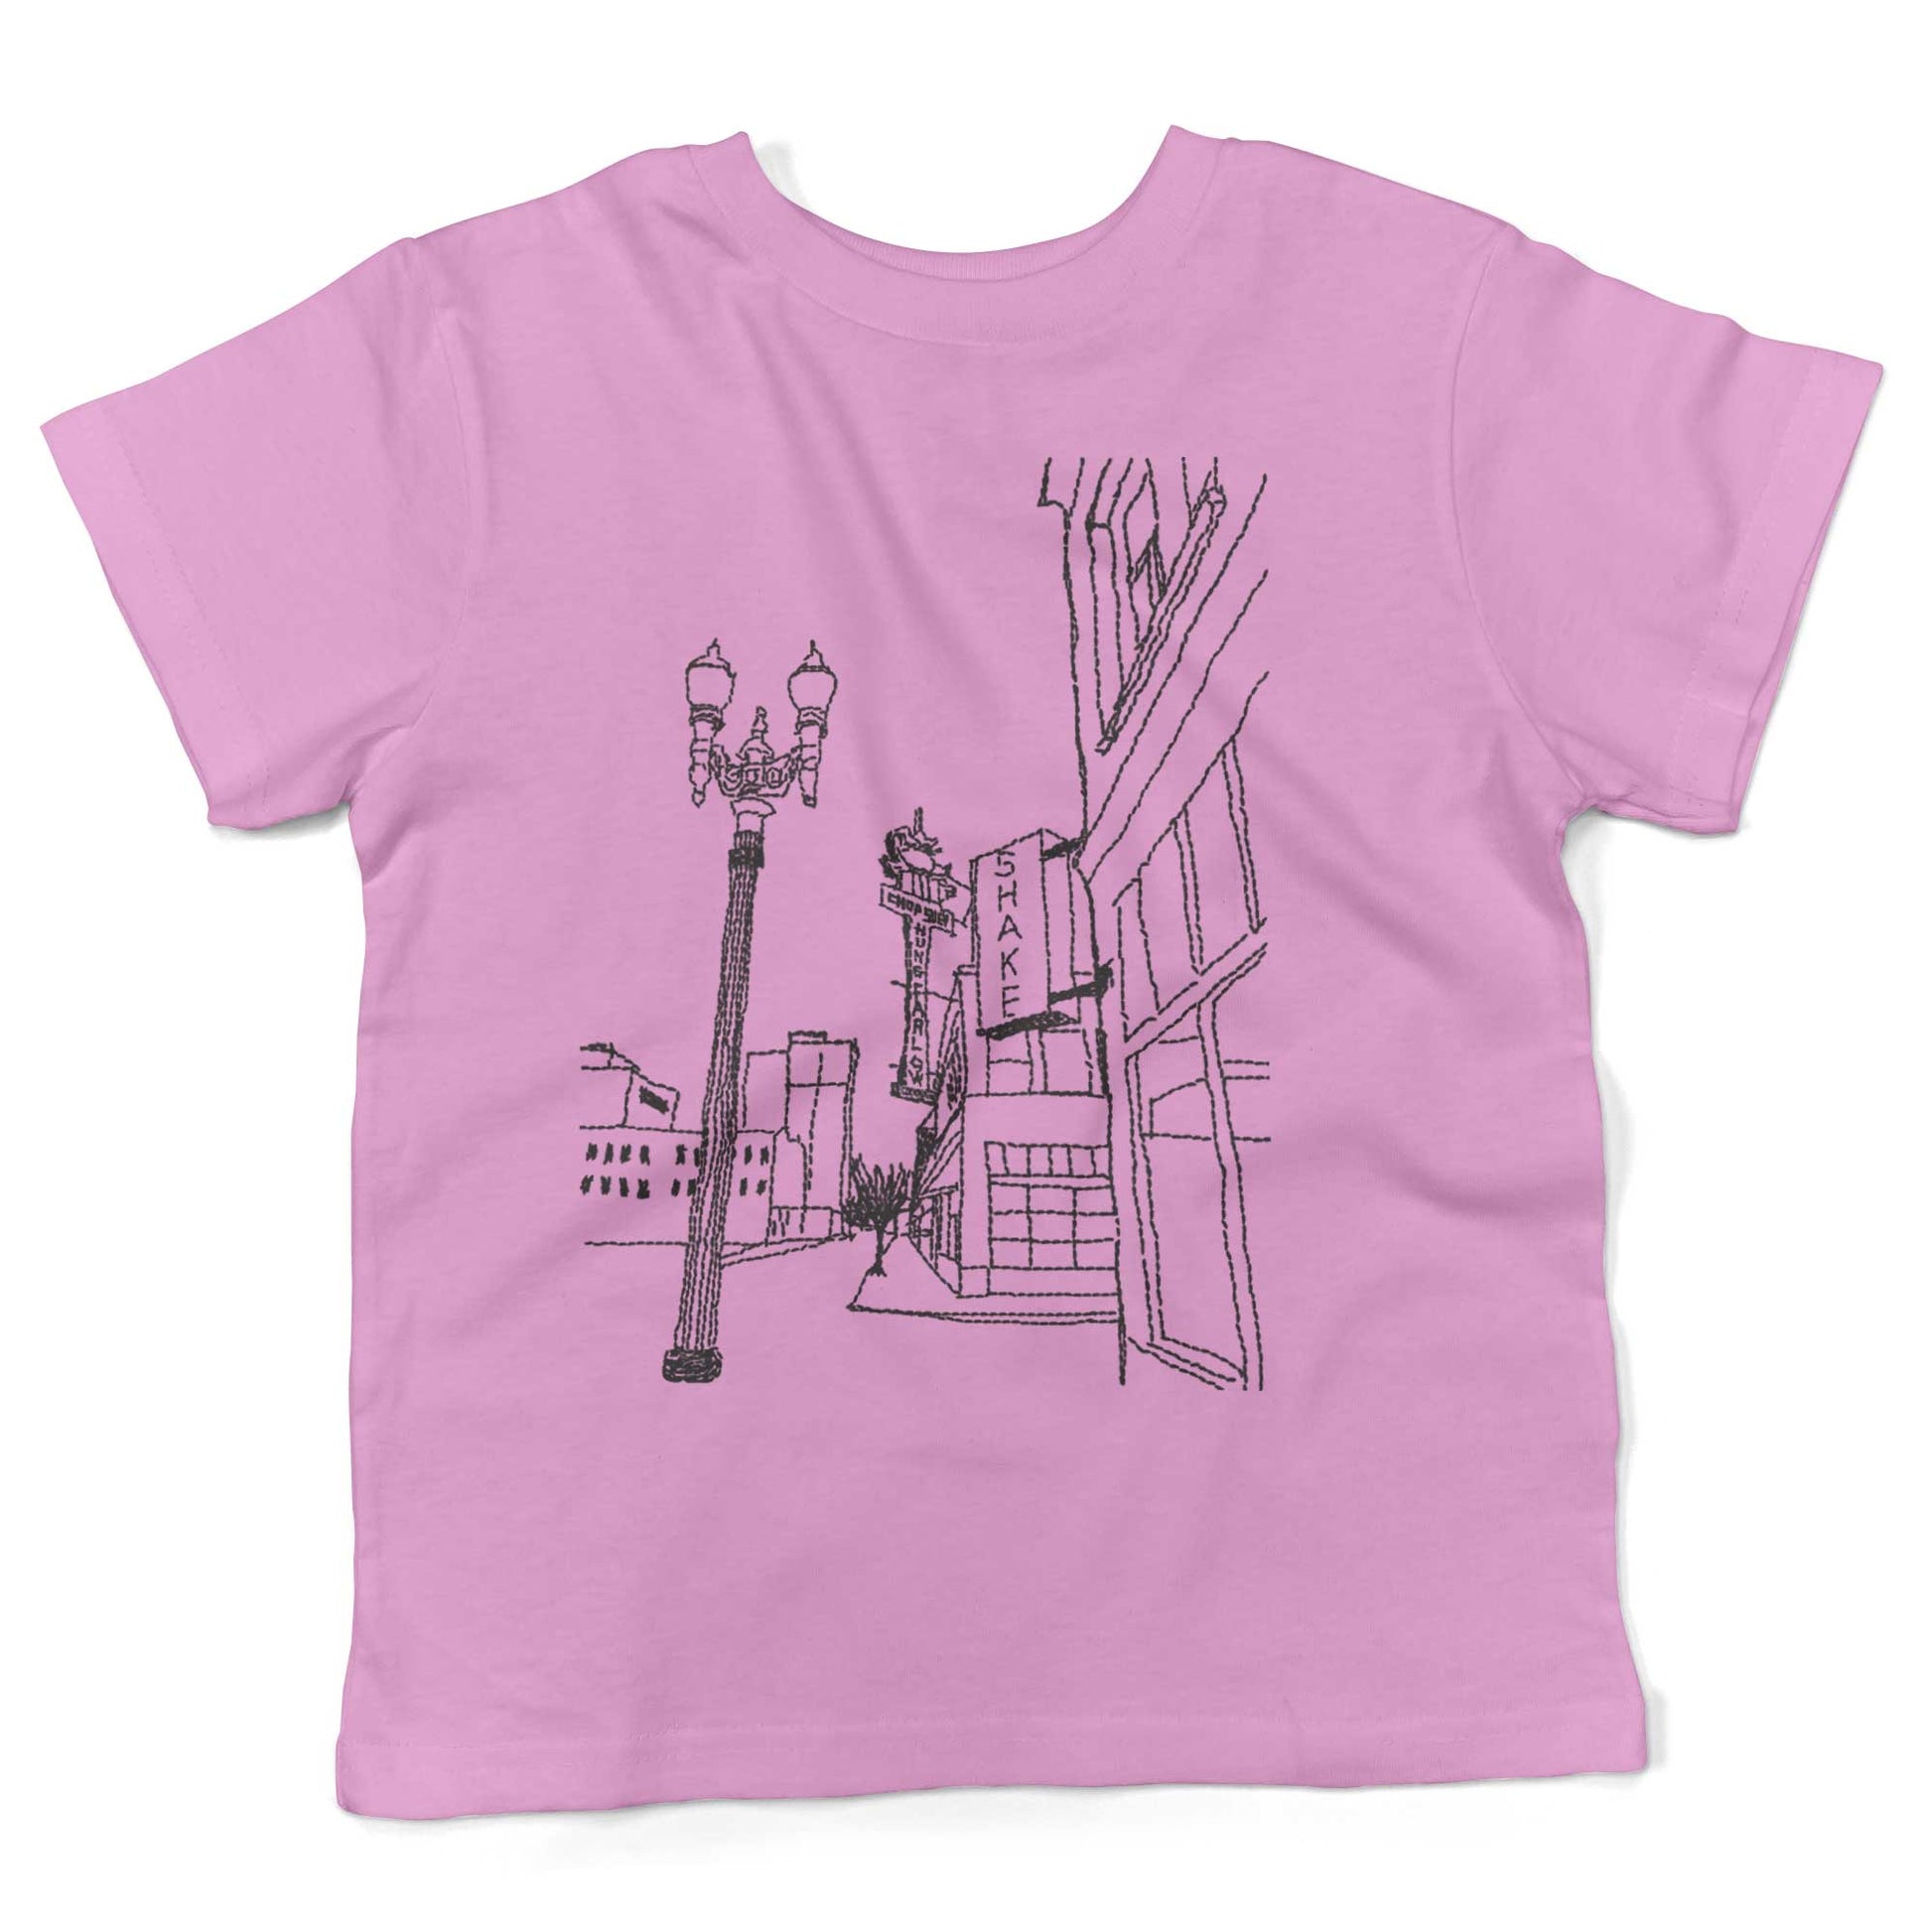 Chinatown Hung Far Low Restaurant Toddler Shirt-Organic Pink-2T